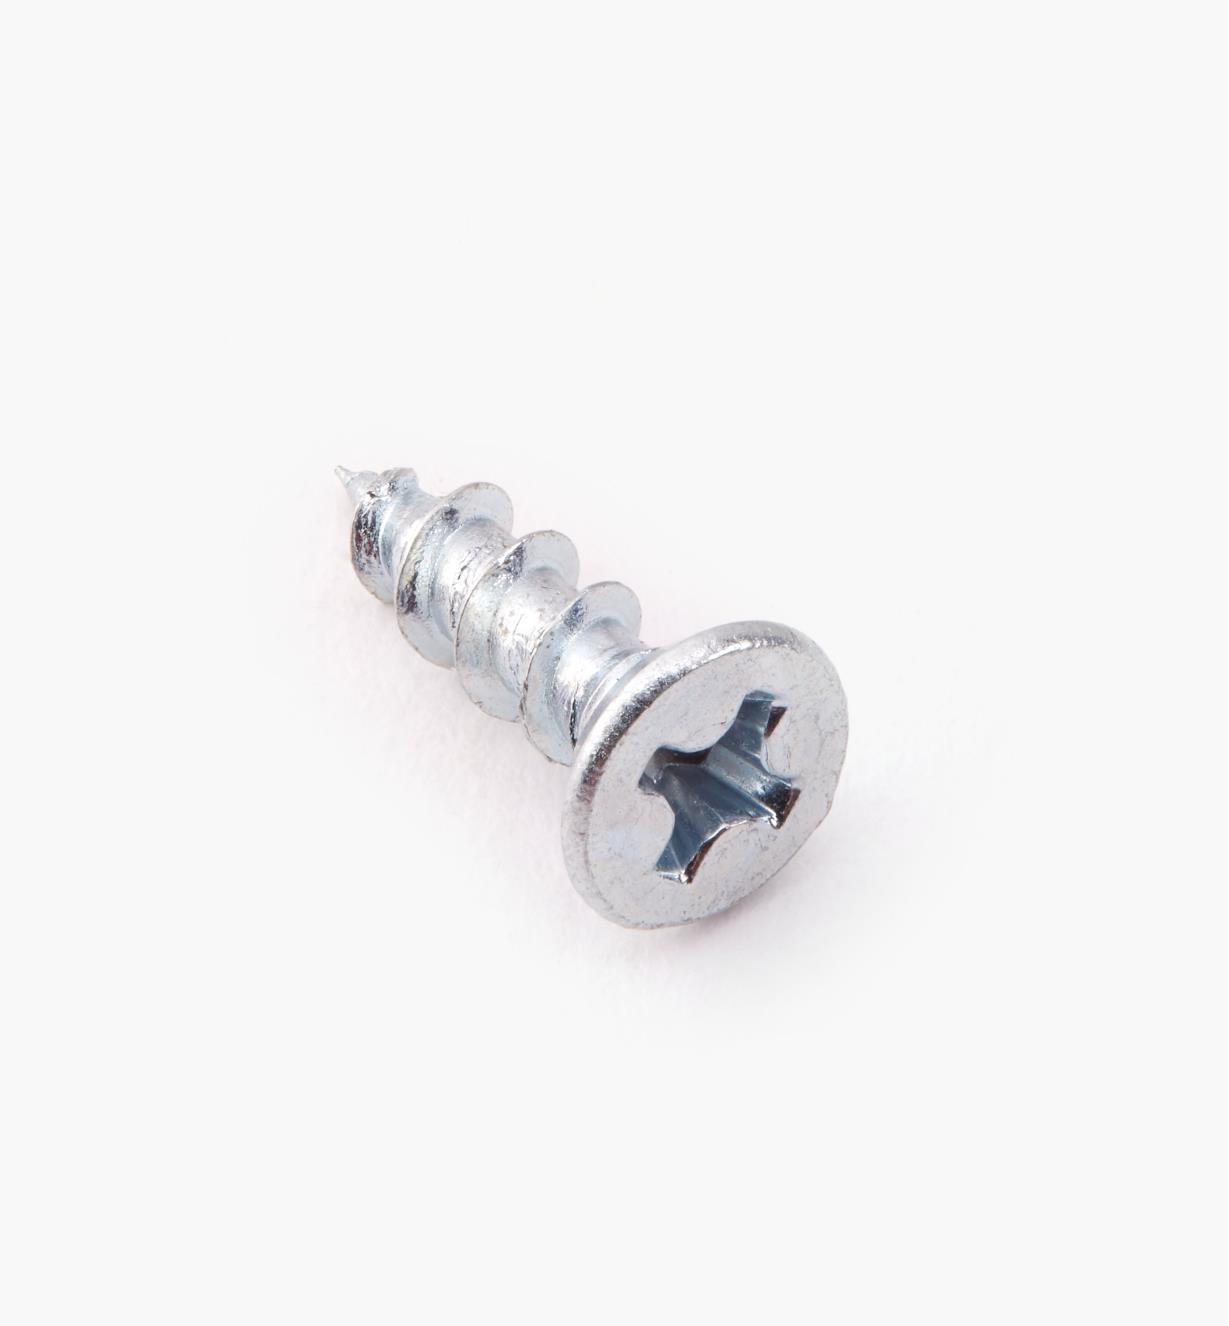 01Z6104 - #6 × 1/2" Zinc-Plated Hinge Screws, pkg of 100